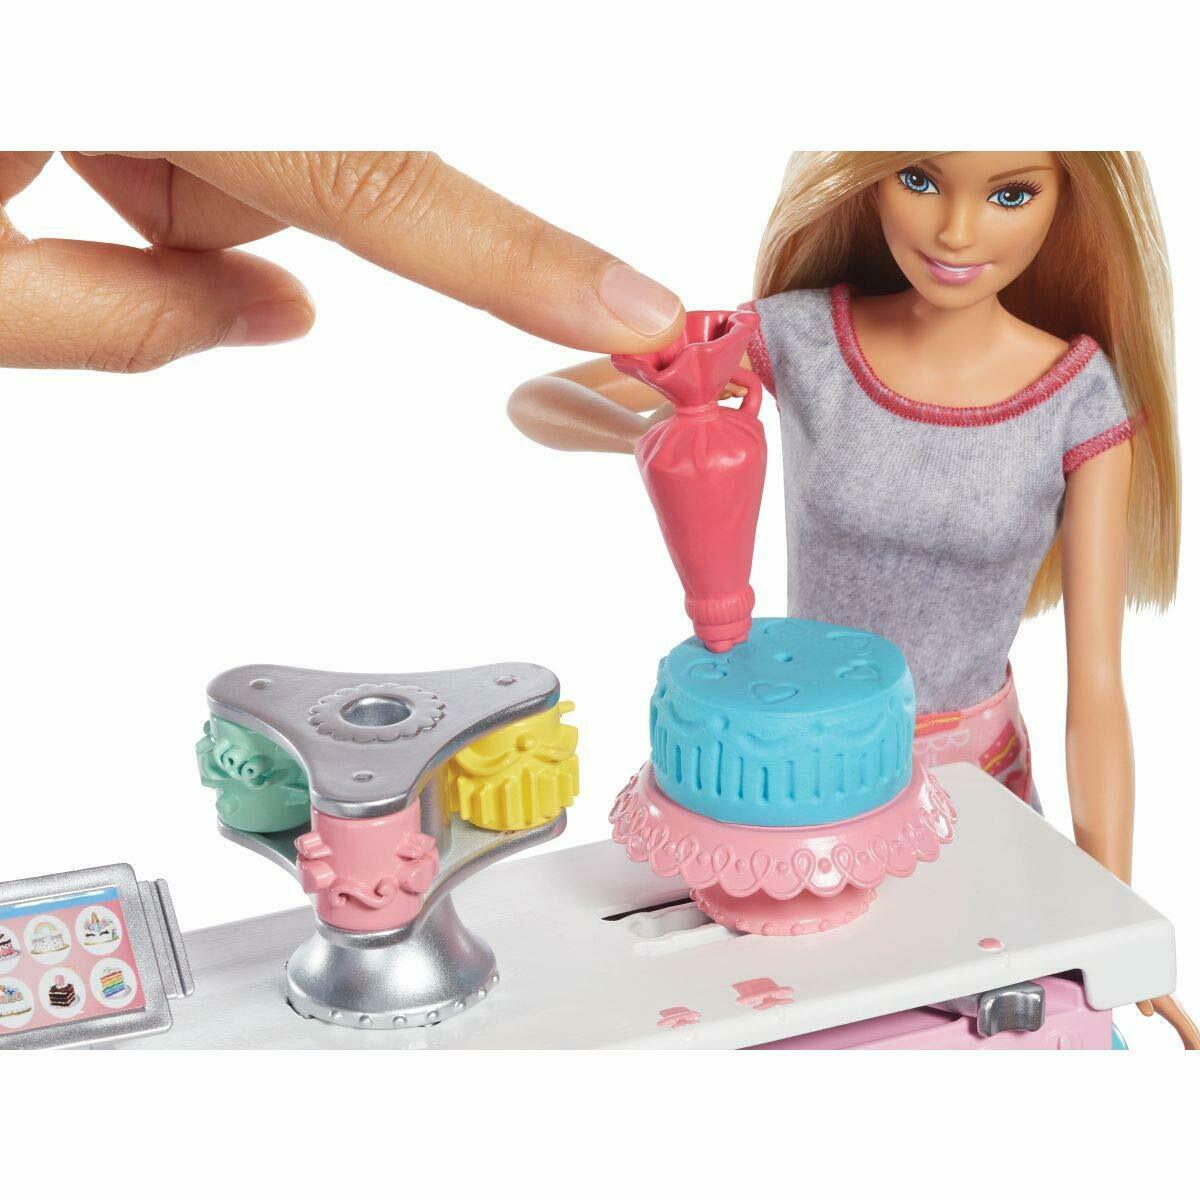 Barbie Doll & Bakery Playset